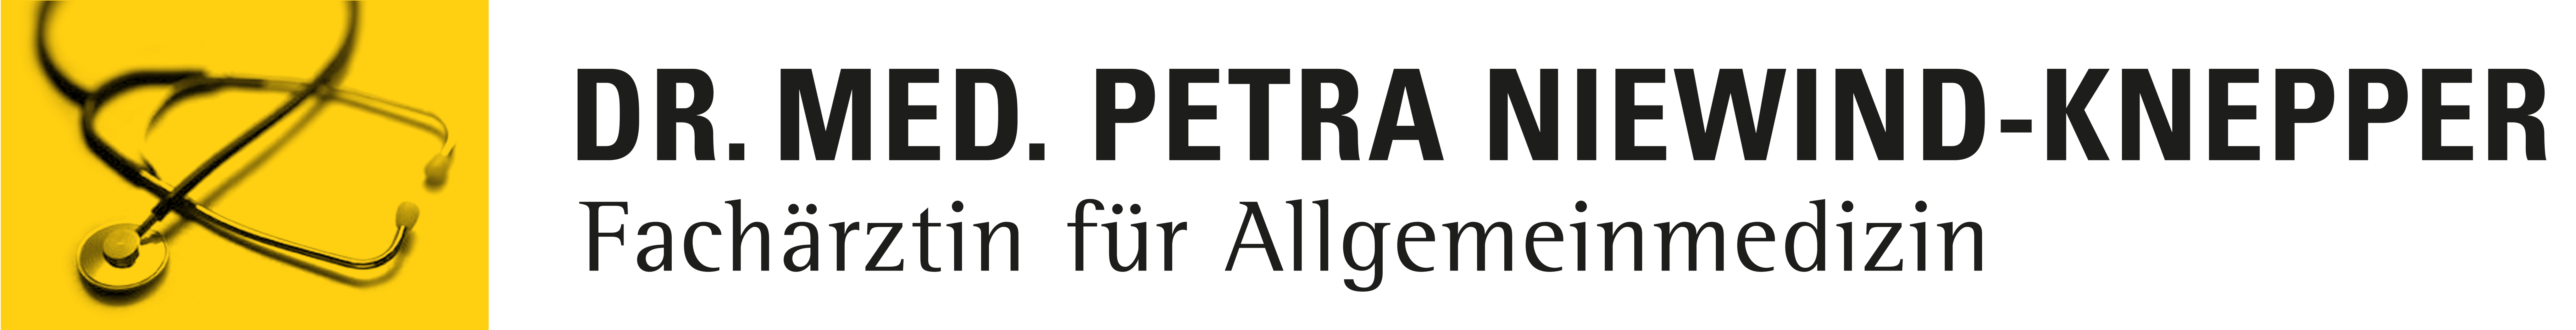 Logo Dr. Med. Petra Niewind Knepper